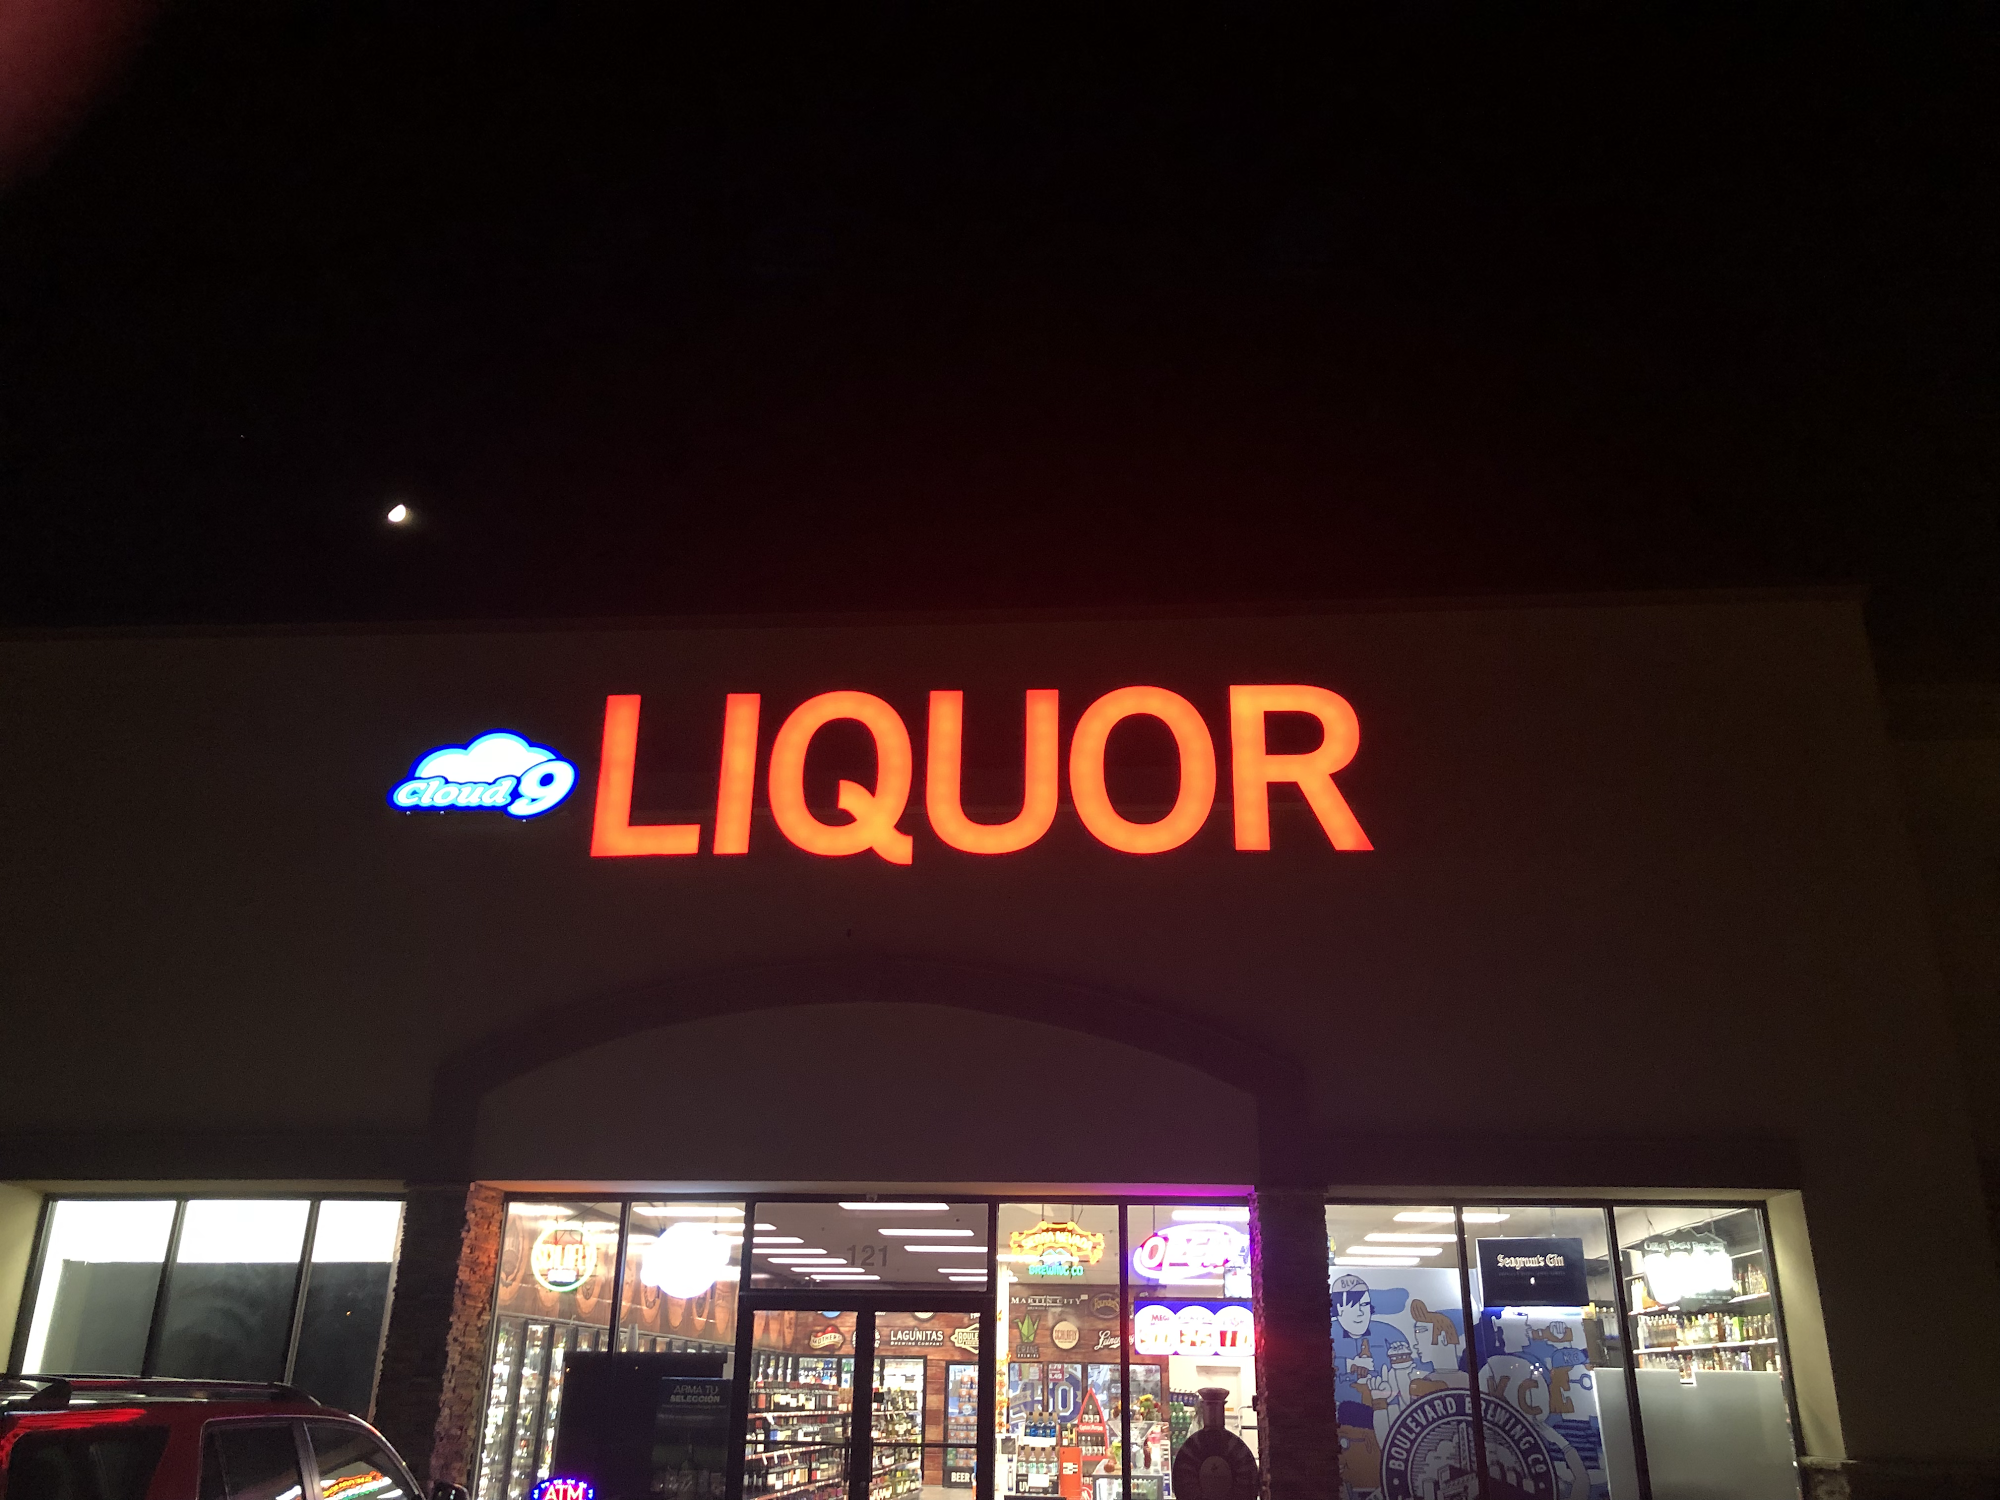 Cloud 9 Liquor